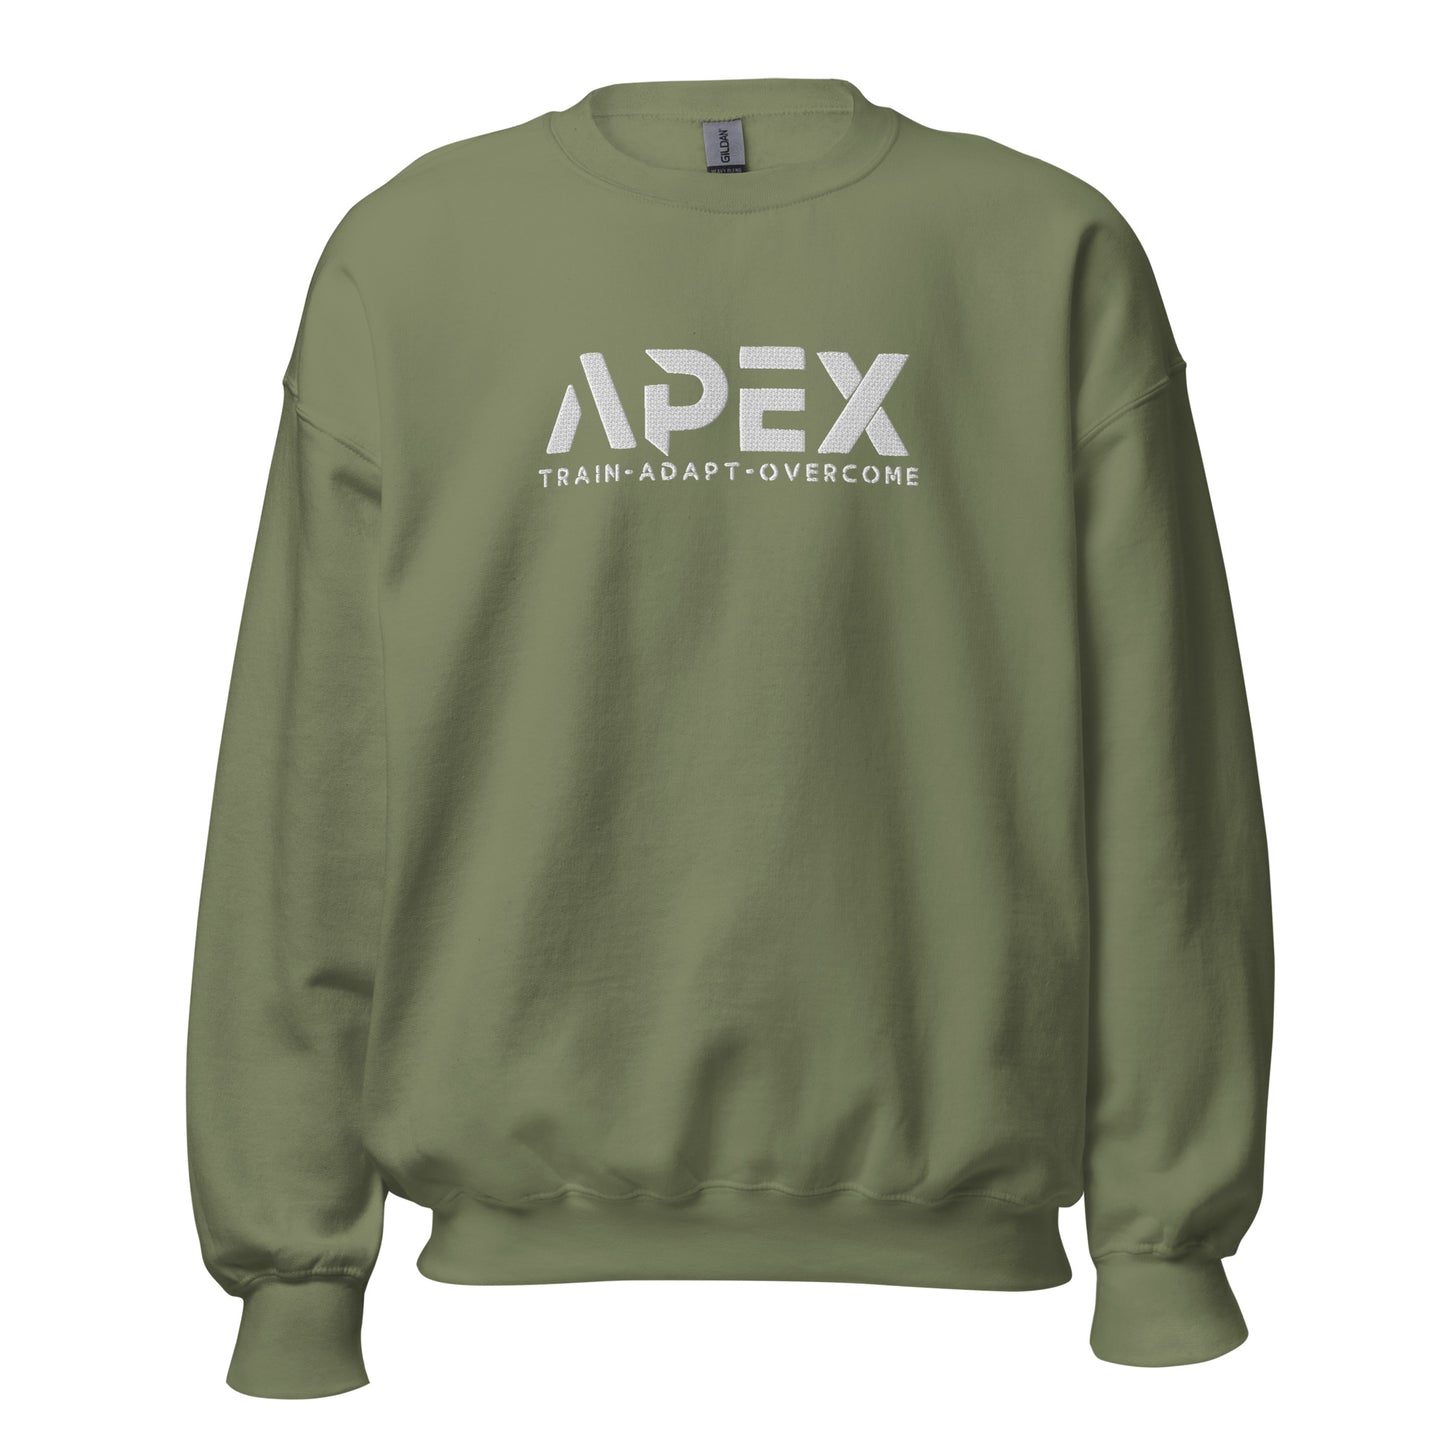 Apex embroidered crewneck sweatshirt